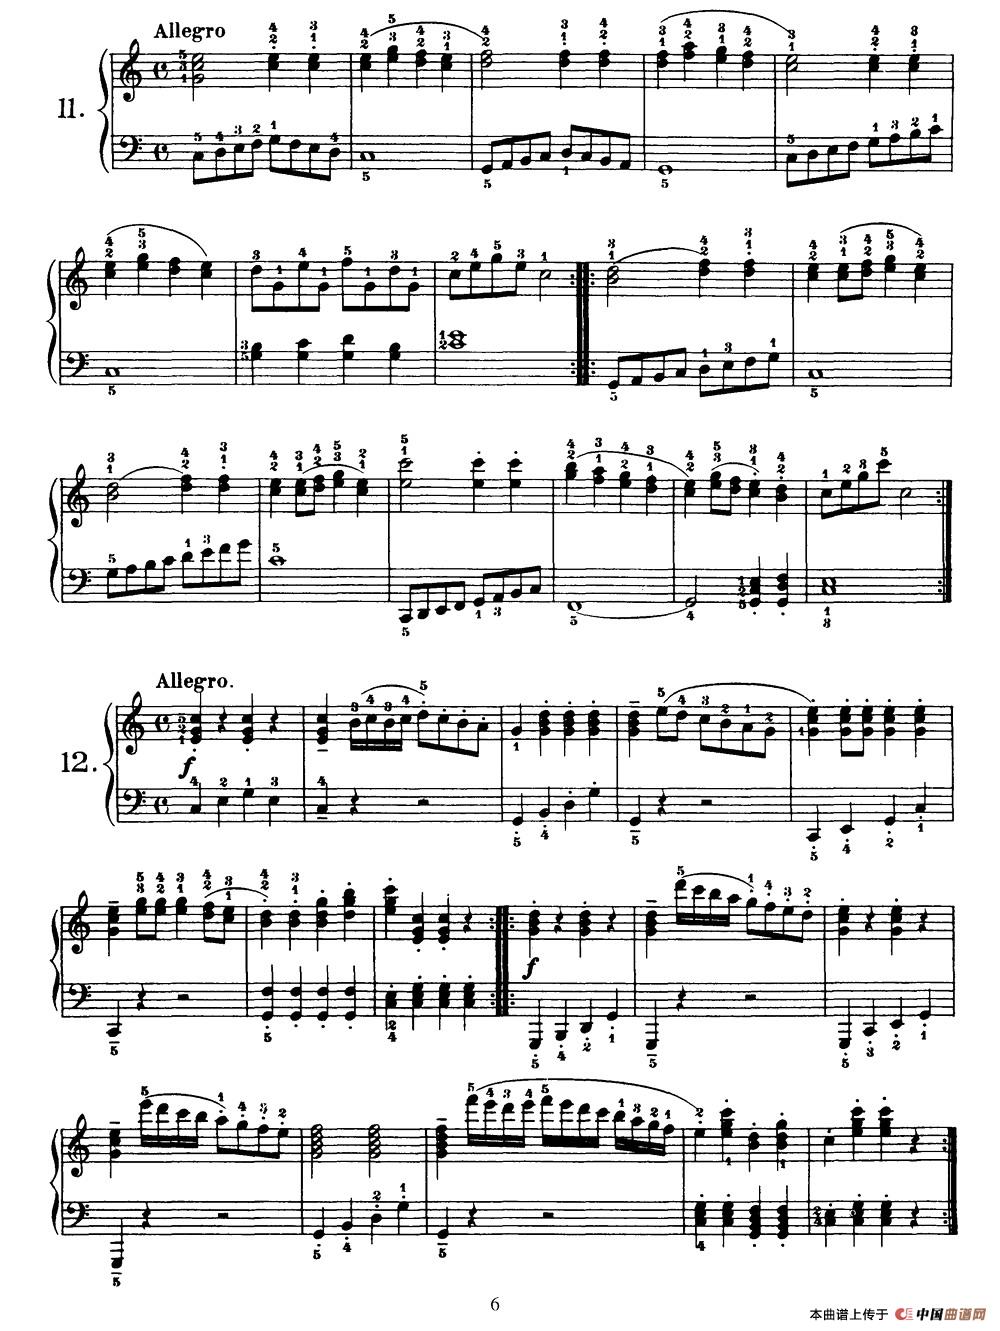 One Hundred and Ten Easy and Progressive Exercises Op.453（车尔尼110首简易练习曲 11——20）钢琴谱